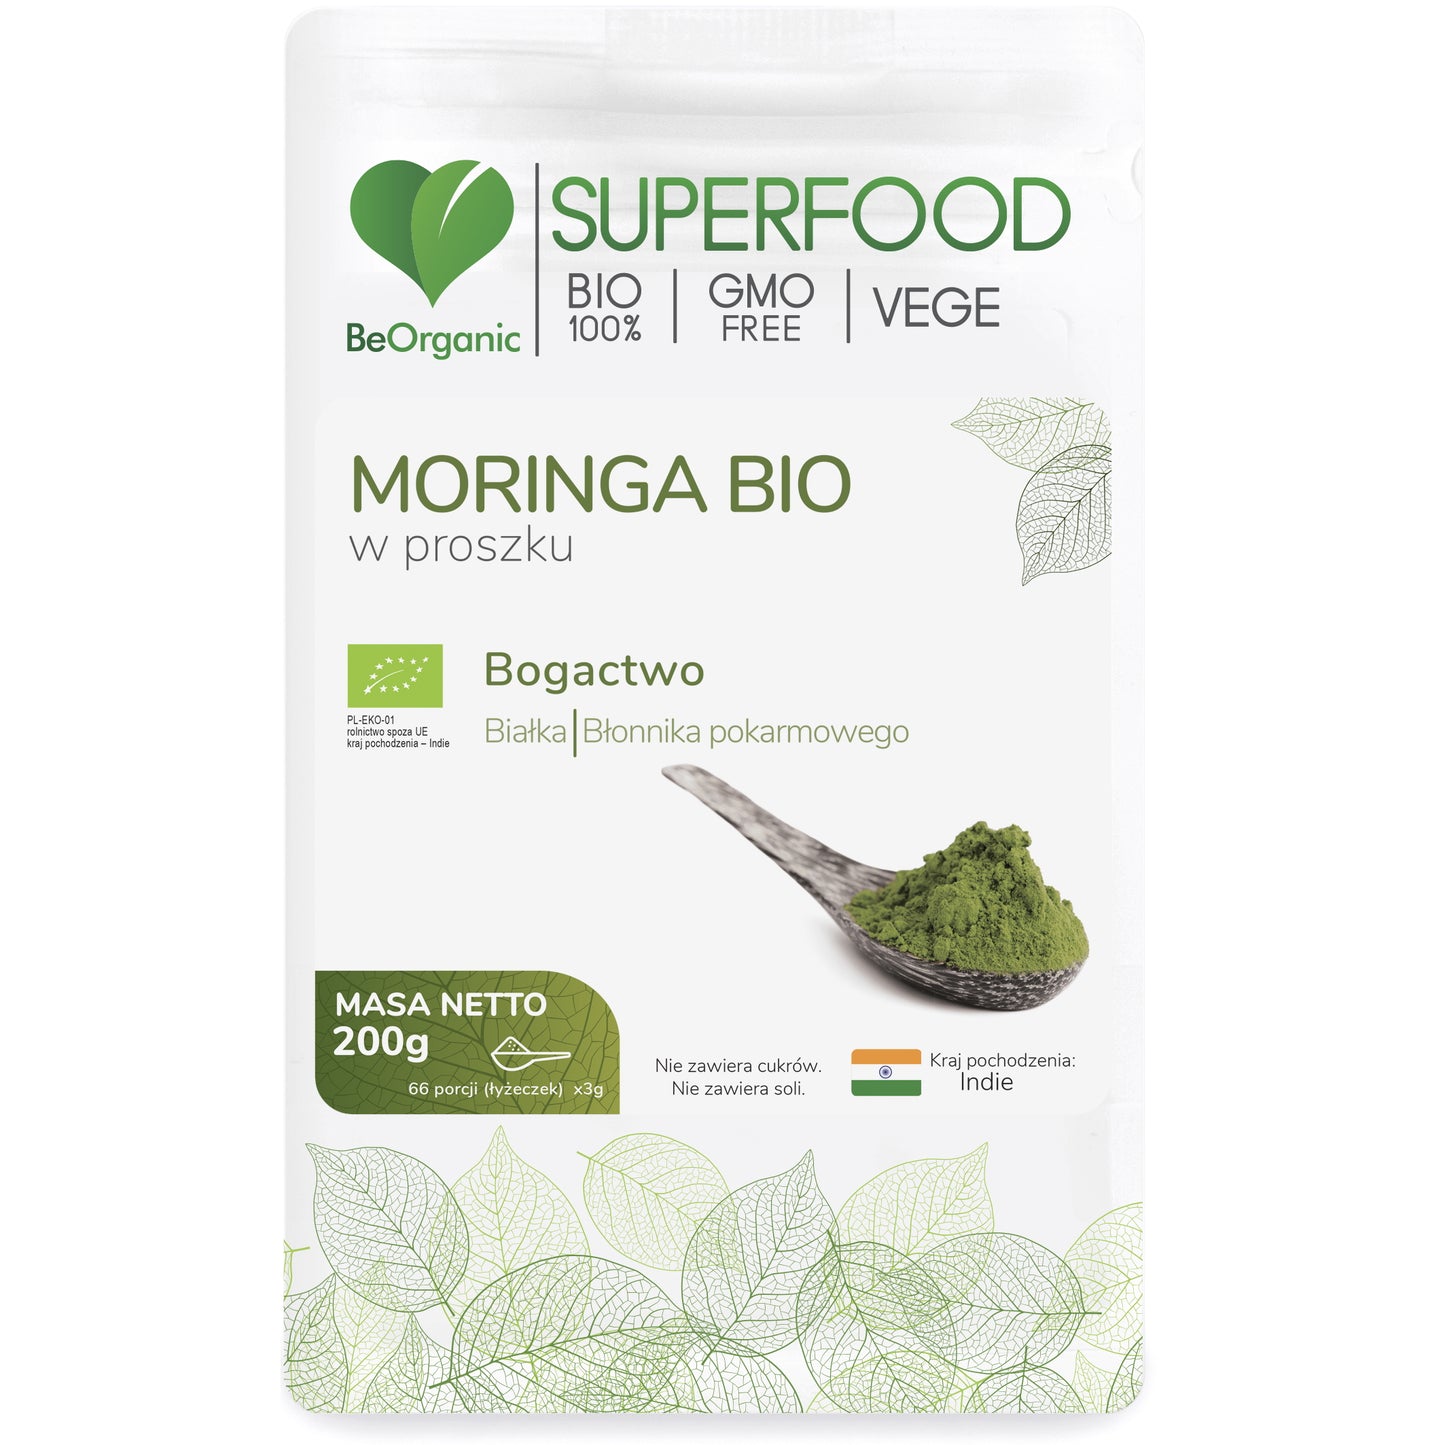 BeOrganic Moringa powder, 200g